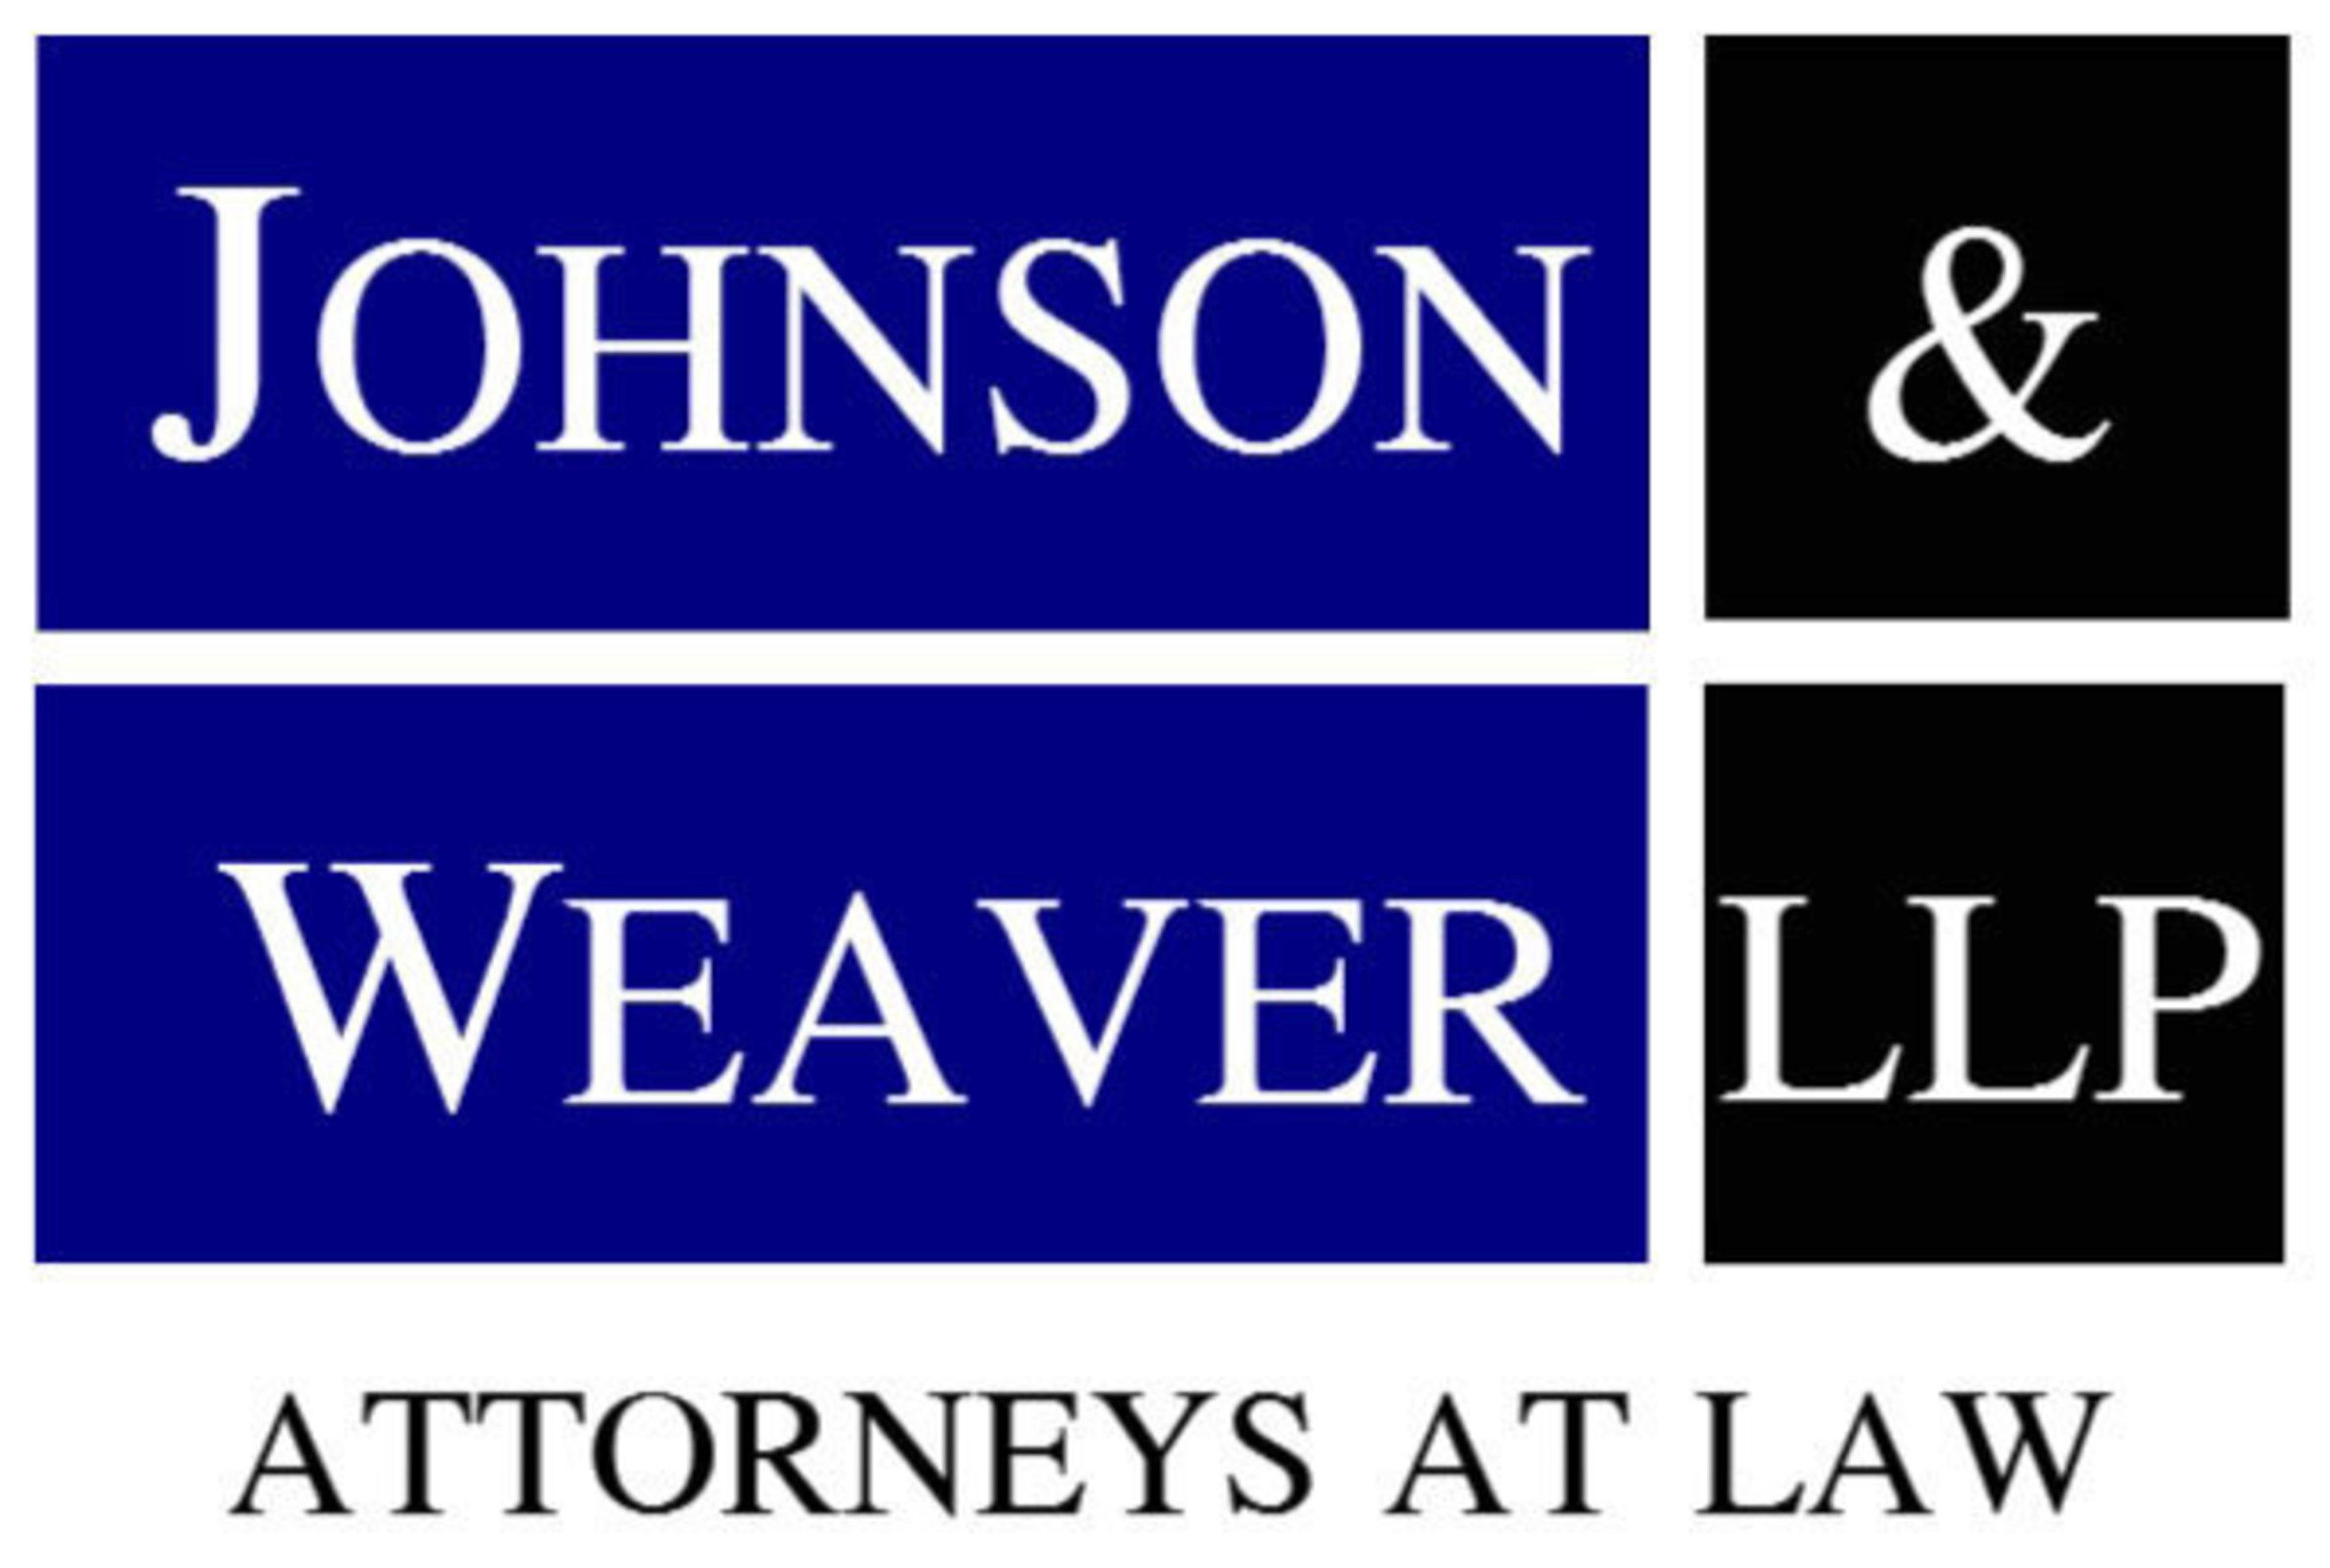 Johnson & Weaver LLP